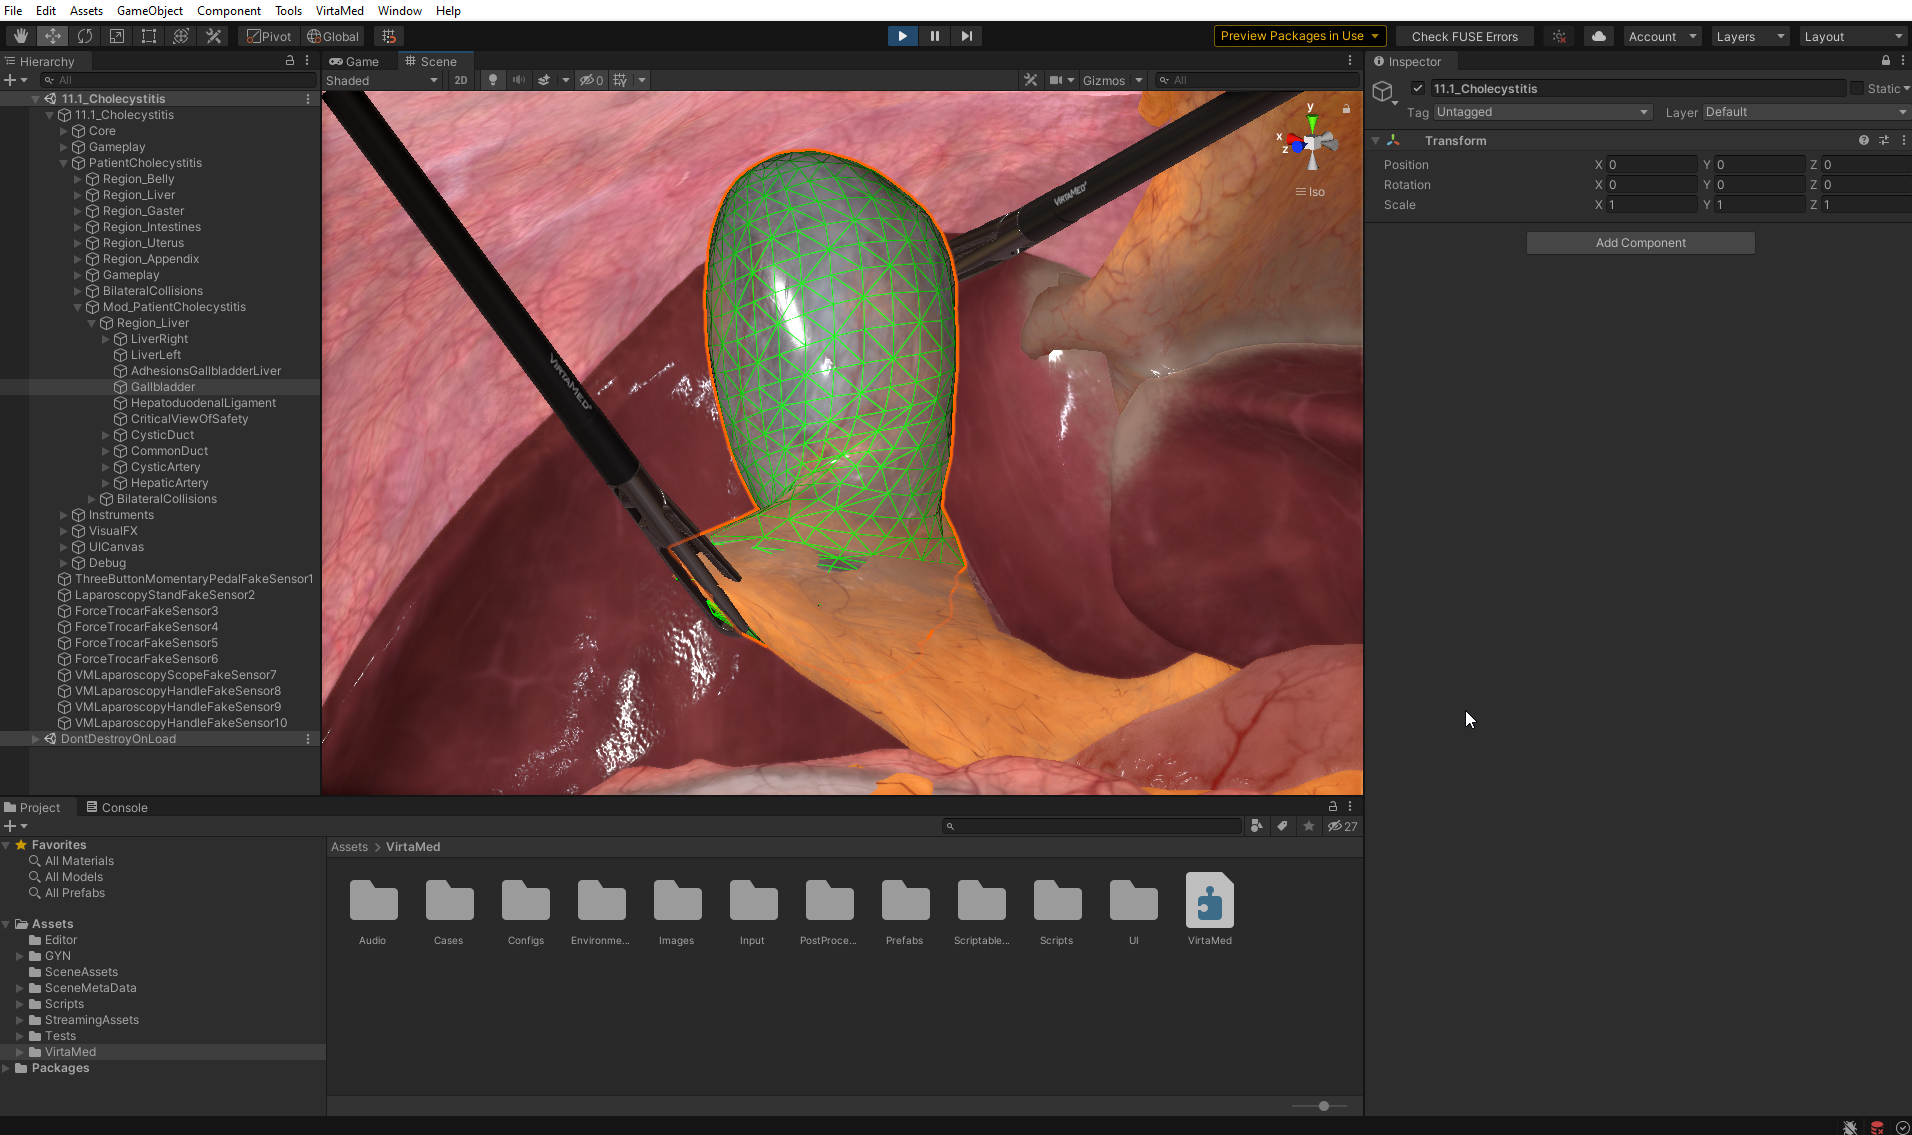 The laparoscopic surgery app built in Unity